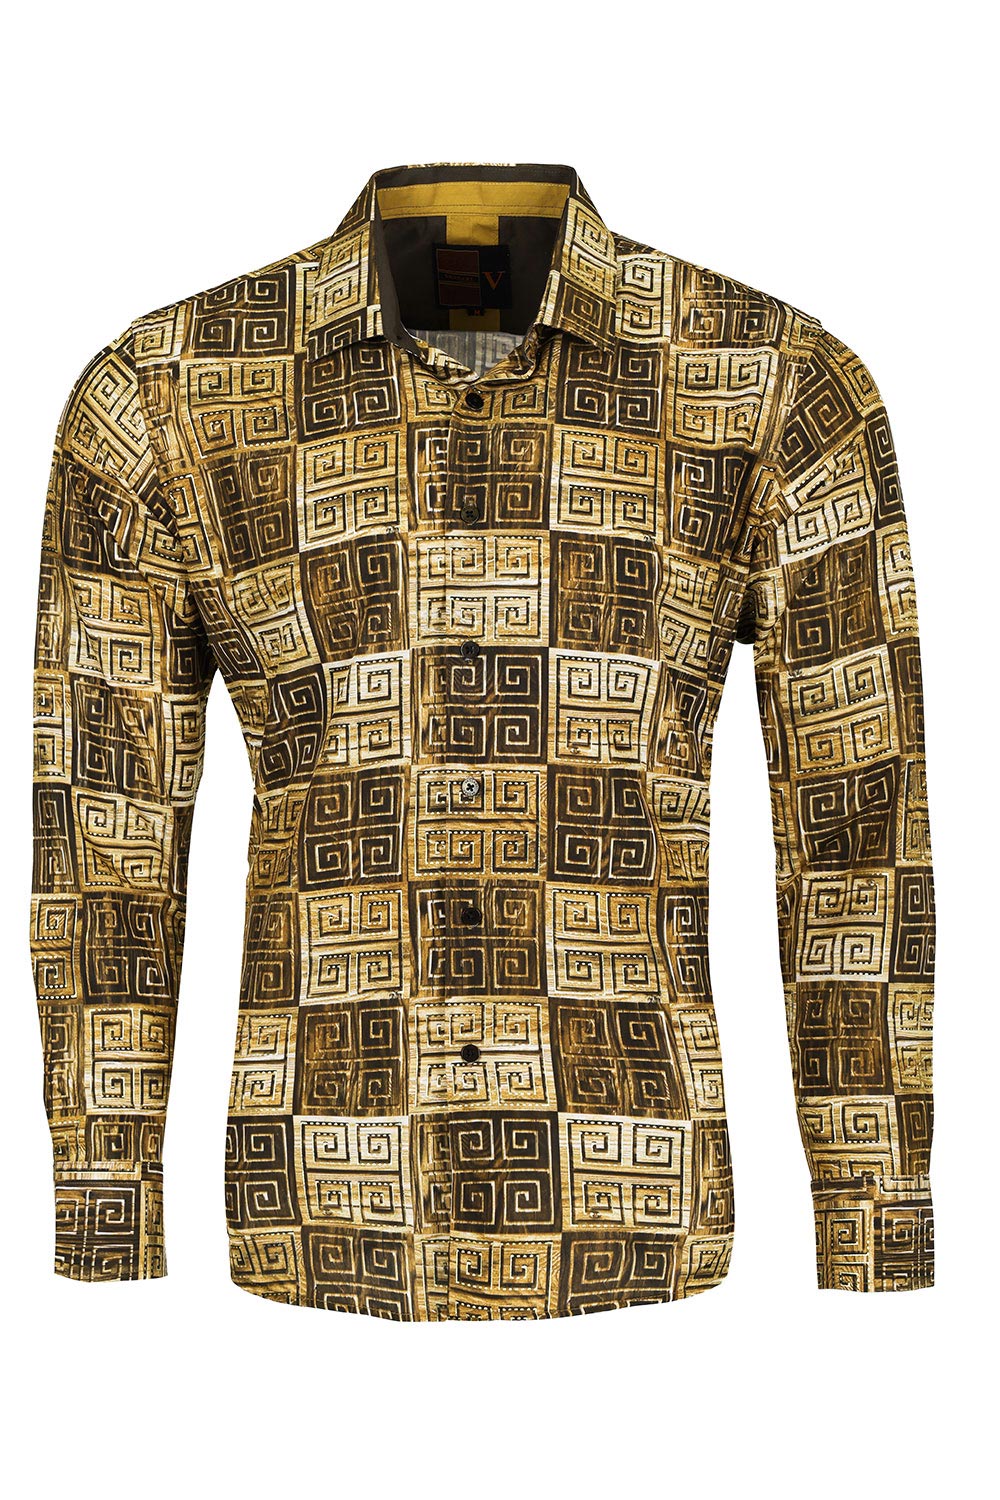 Vassari Men's Printed Multicolor Greek Key Pattern B Shirts VS125 gold